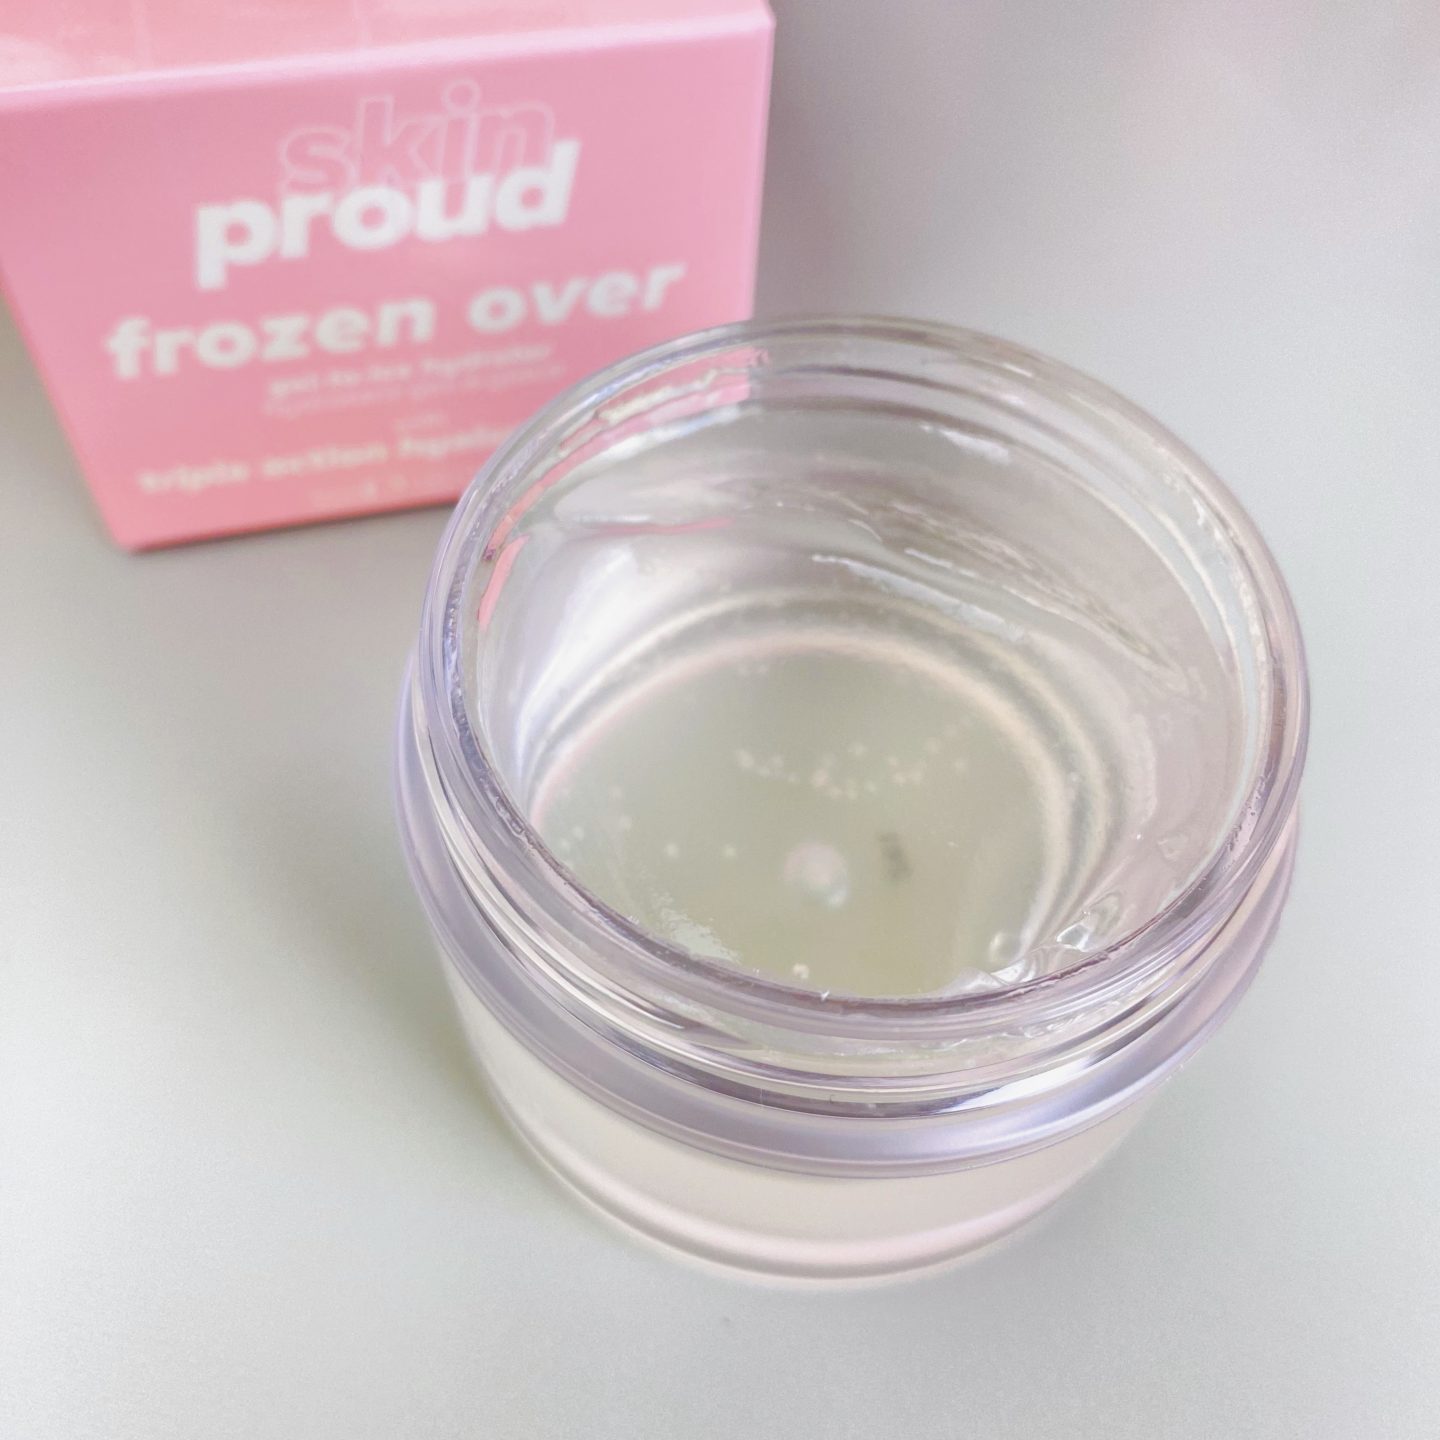 Skin Proud Frozen Over Gel-to-Ice Hydrator